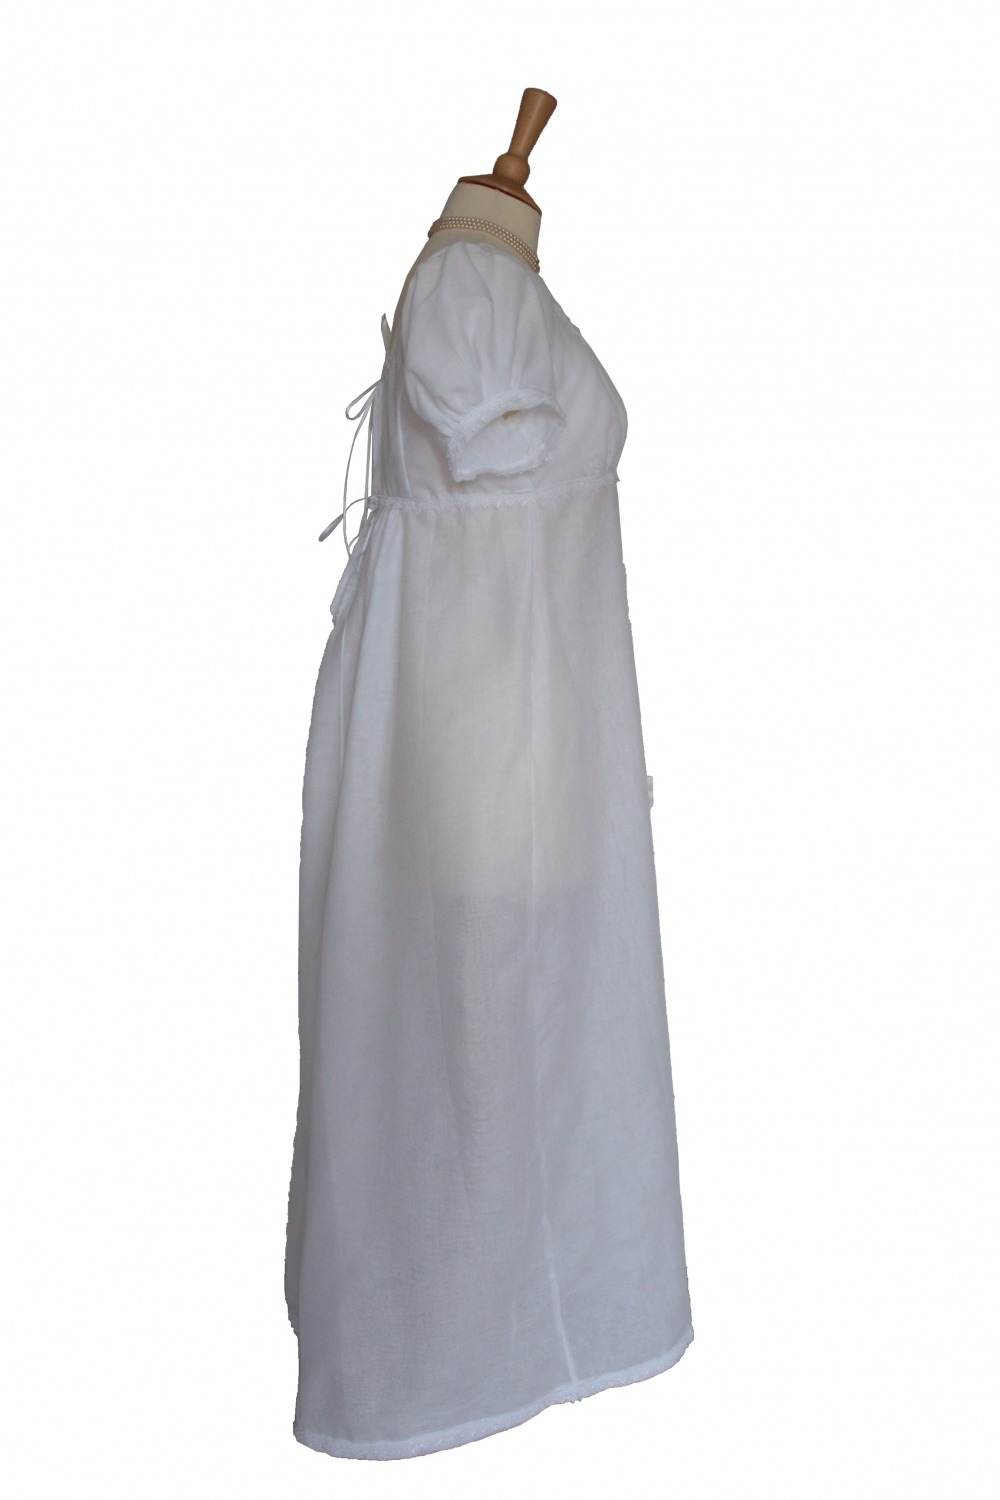 Ladies Older Girl's 19th Century Petite Jane Austen Regency Day Gown Costume Size 10 - 12 Image